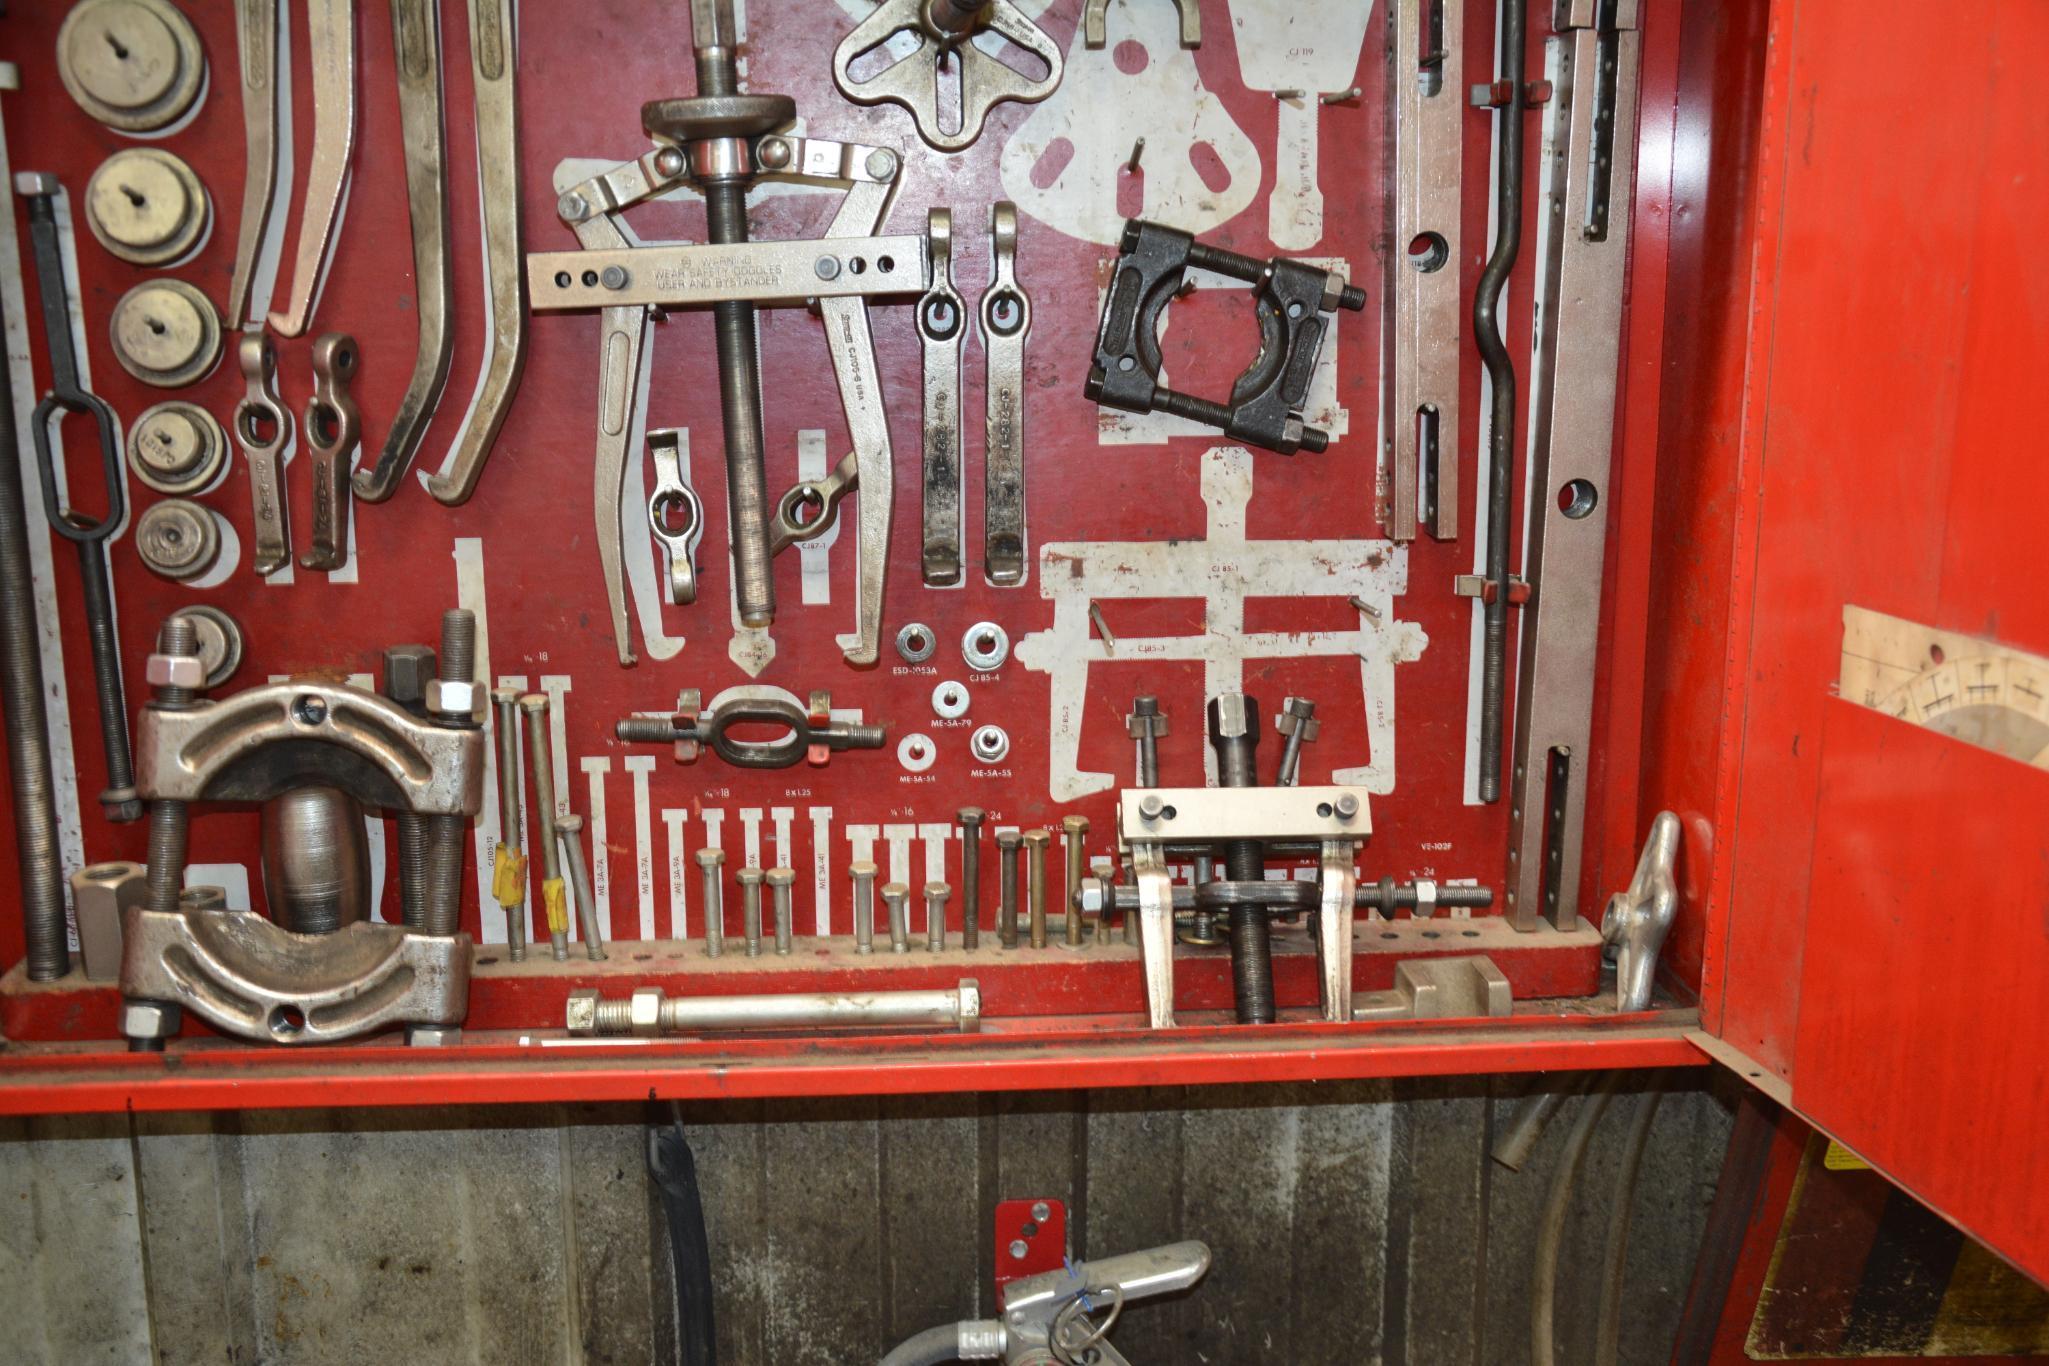 Snap-on CJ-1000 puller set and metal case